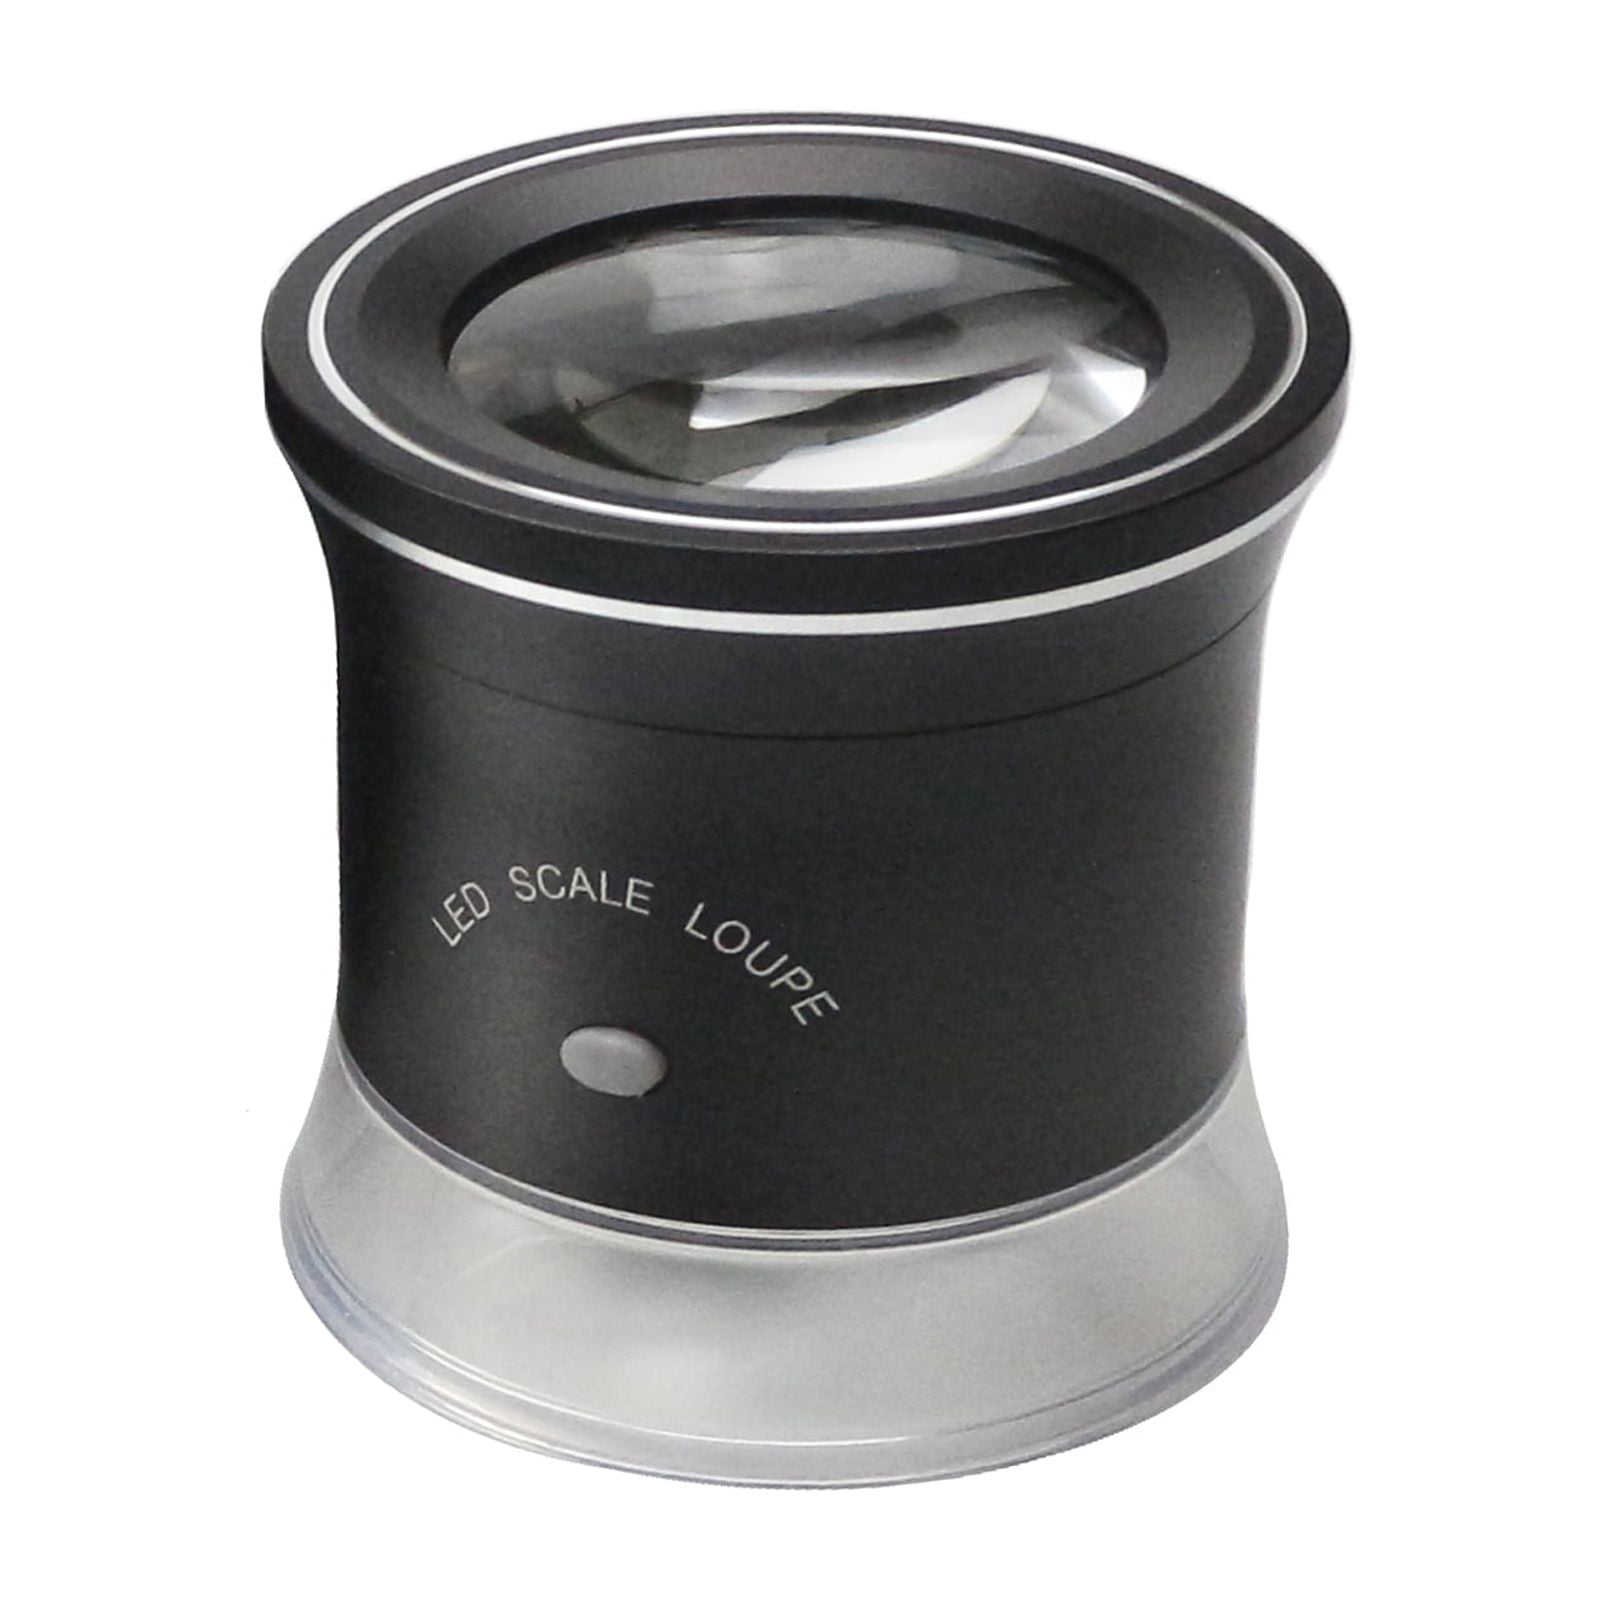 Premium 30x 40mm Measuring Magnifier Magnifying Glass Lens Loop